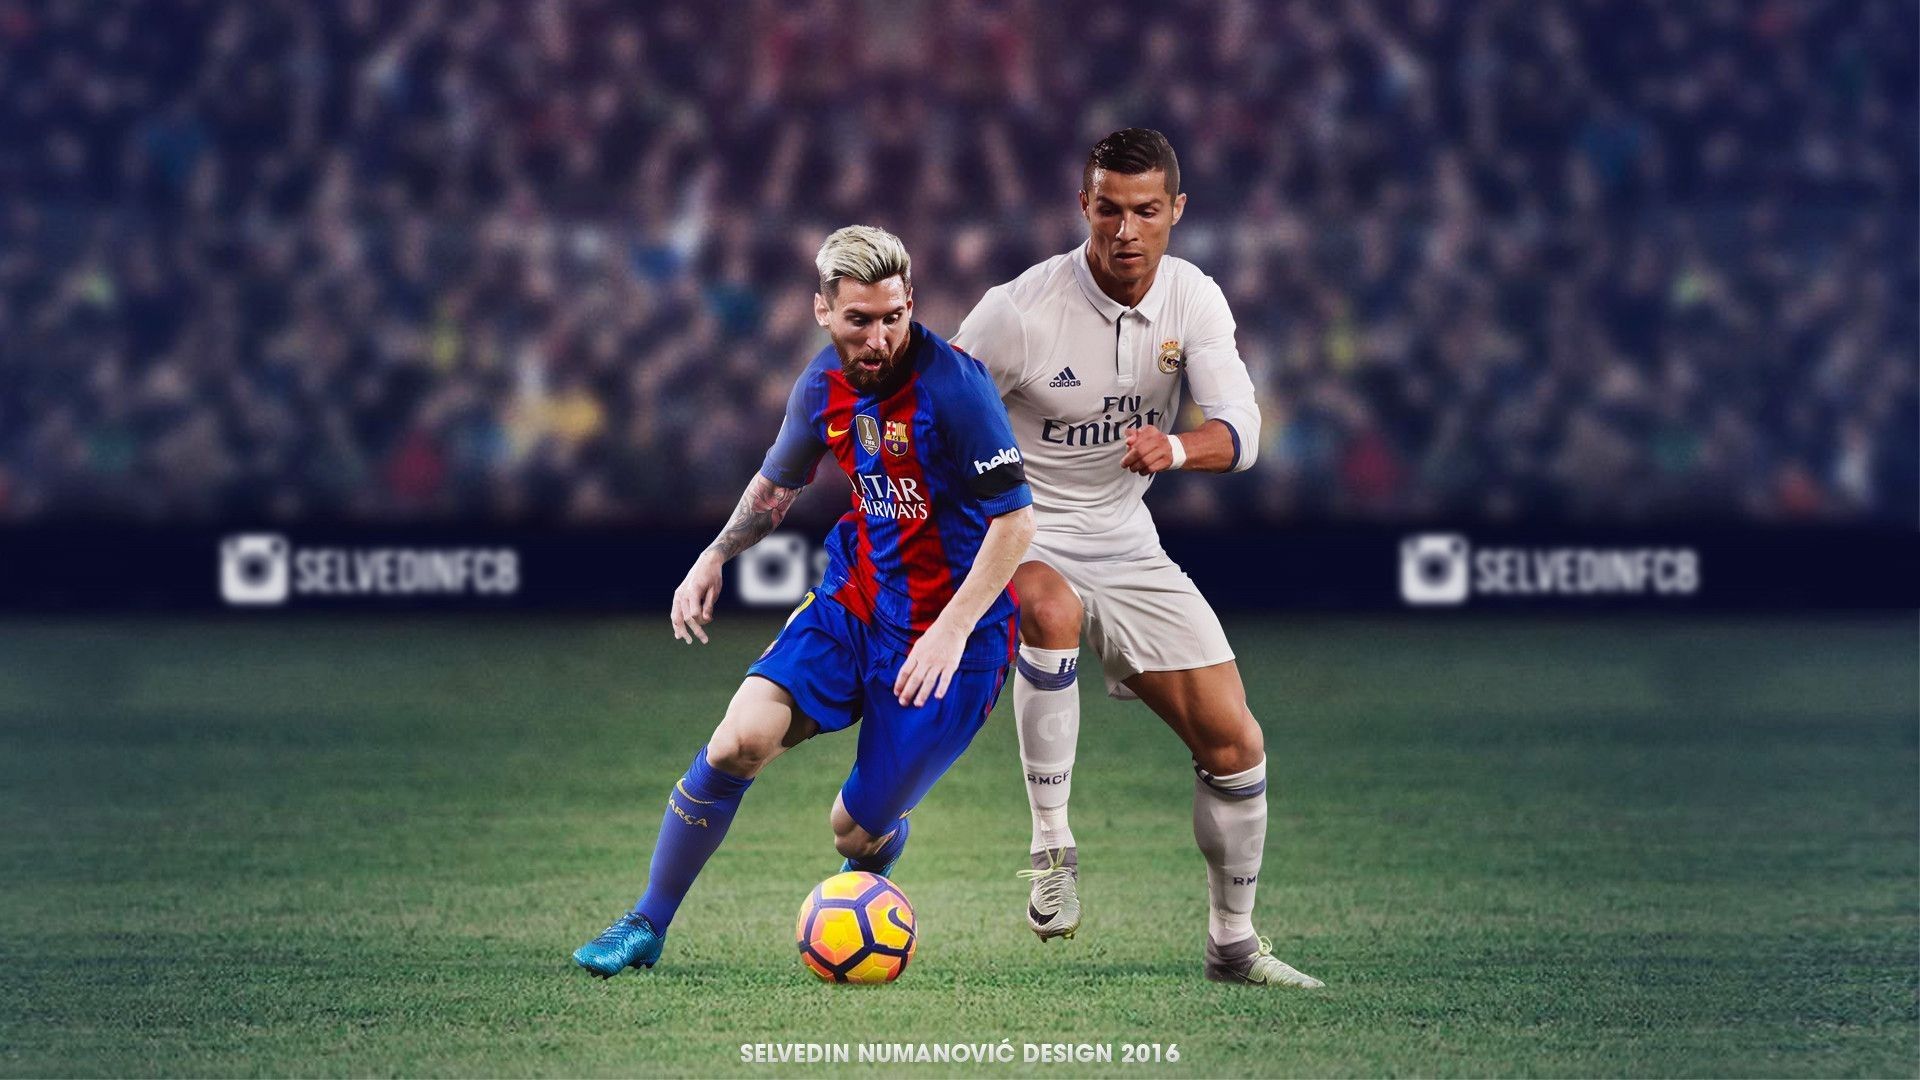 Messi Background 2018